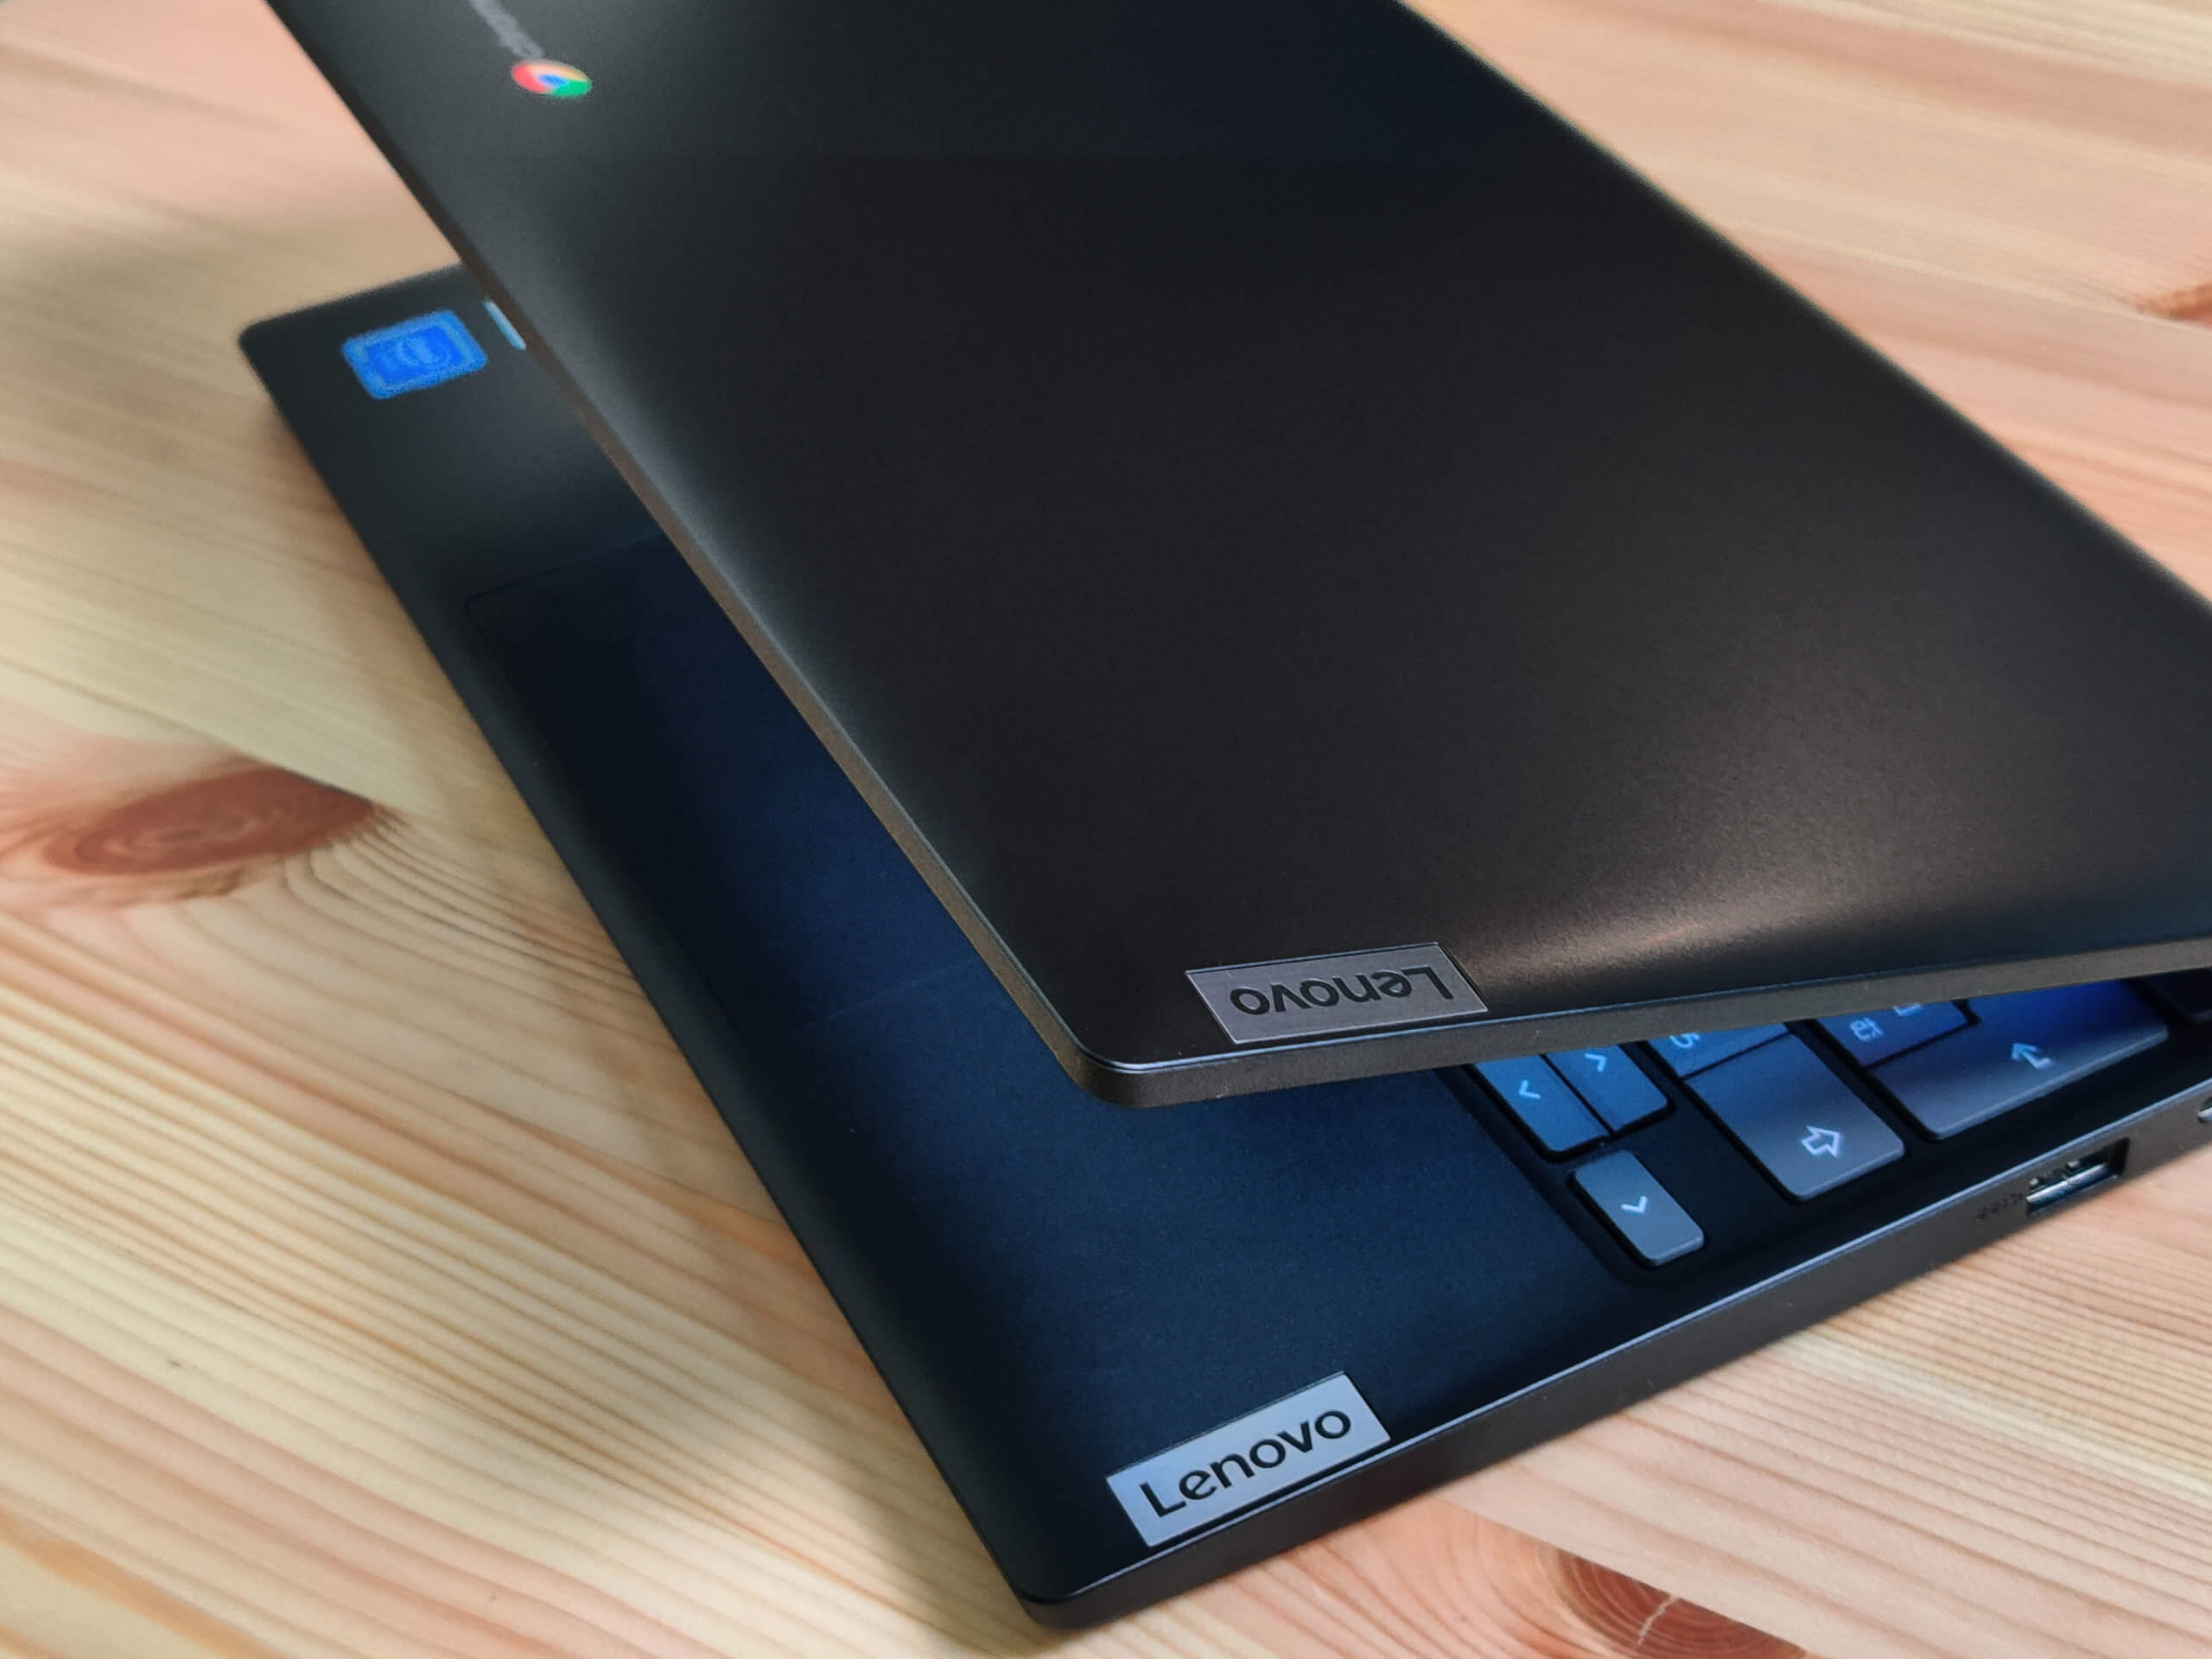 Lenovo IdeaPad Slim350i (レノボアイディアパッド)